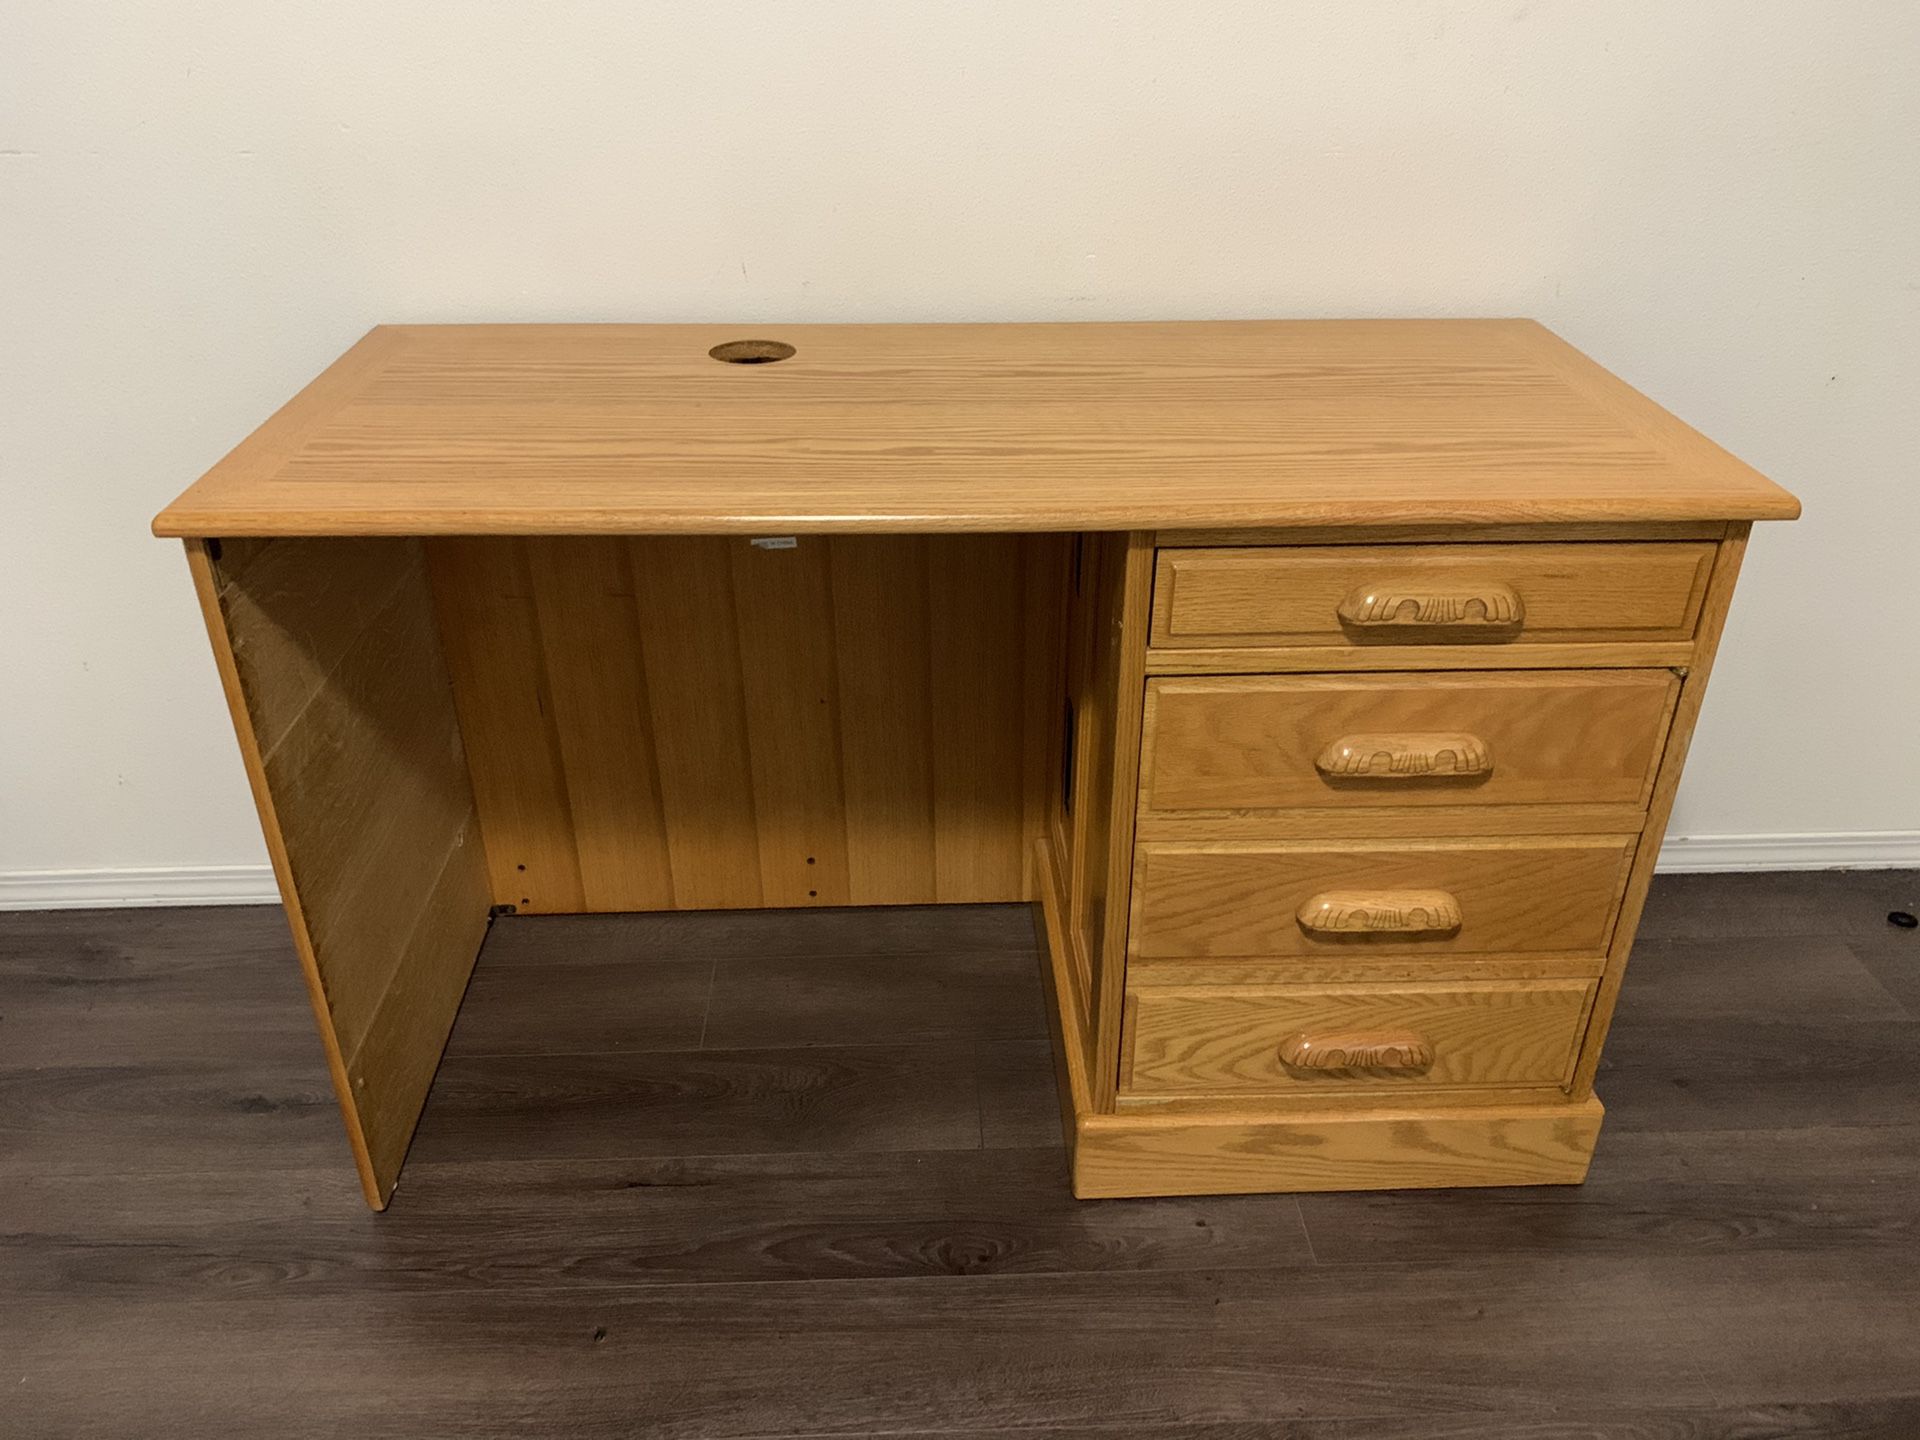 Beautiful authentic wood desk!